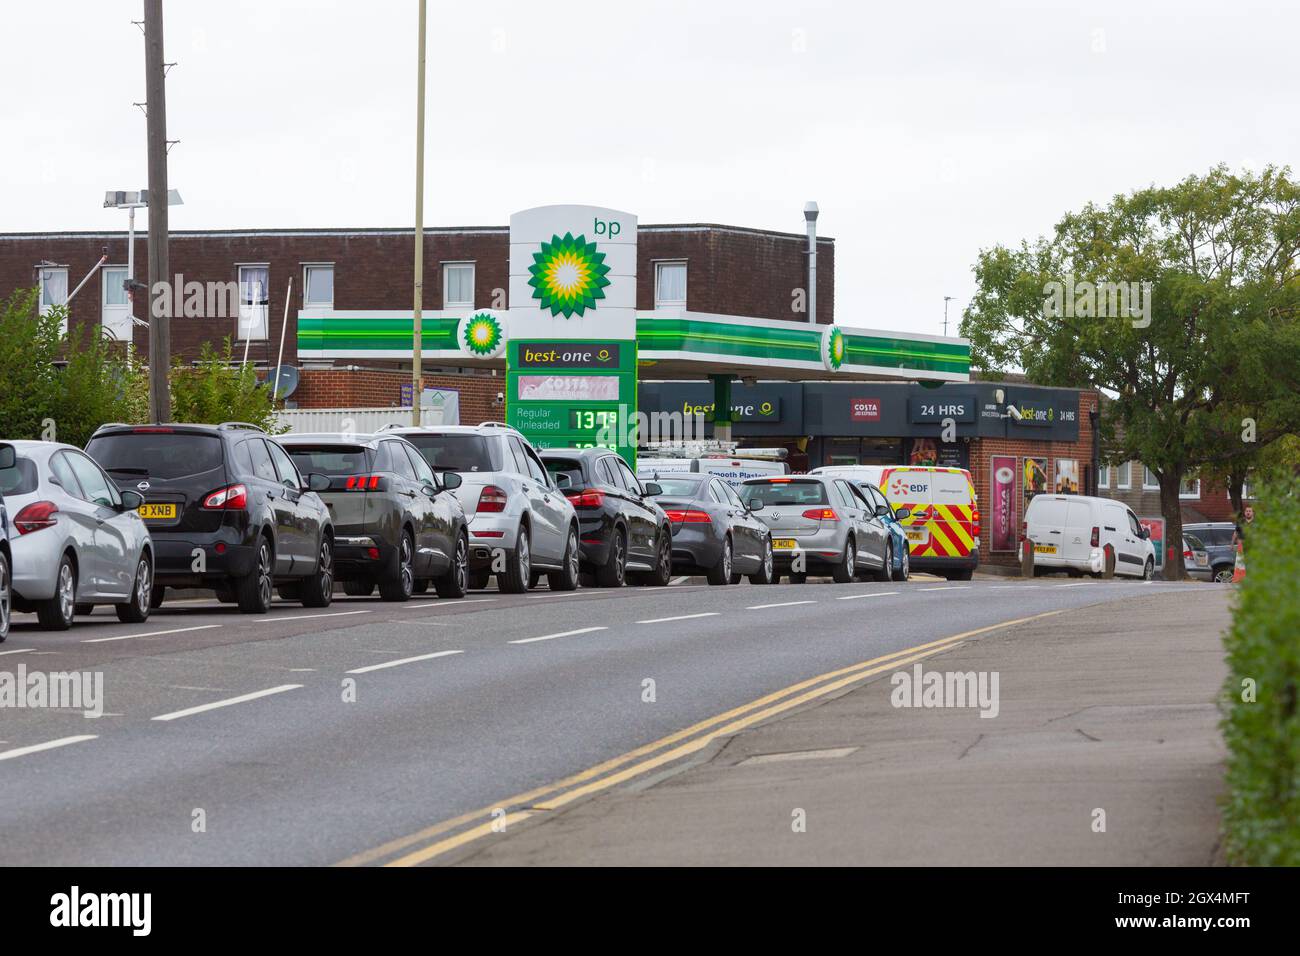 Petrol shortages, long queues for fuel at a bp petrol station, ashford, kent, uk Stock Photo